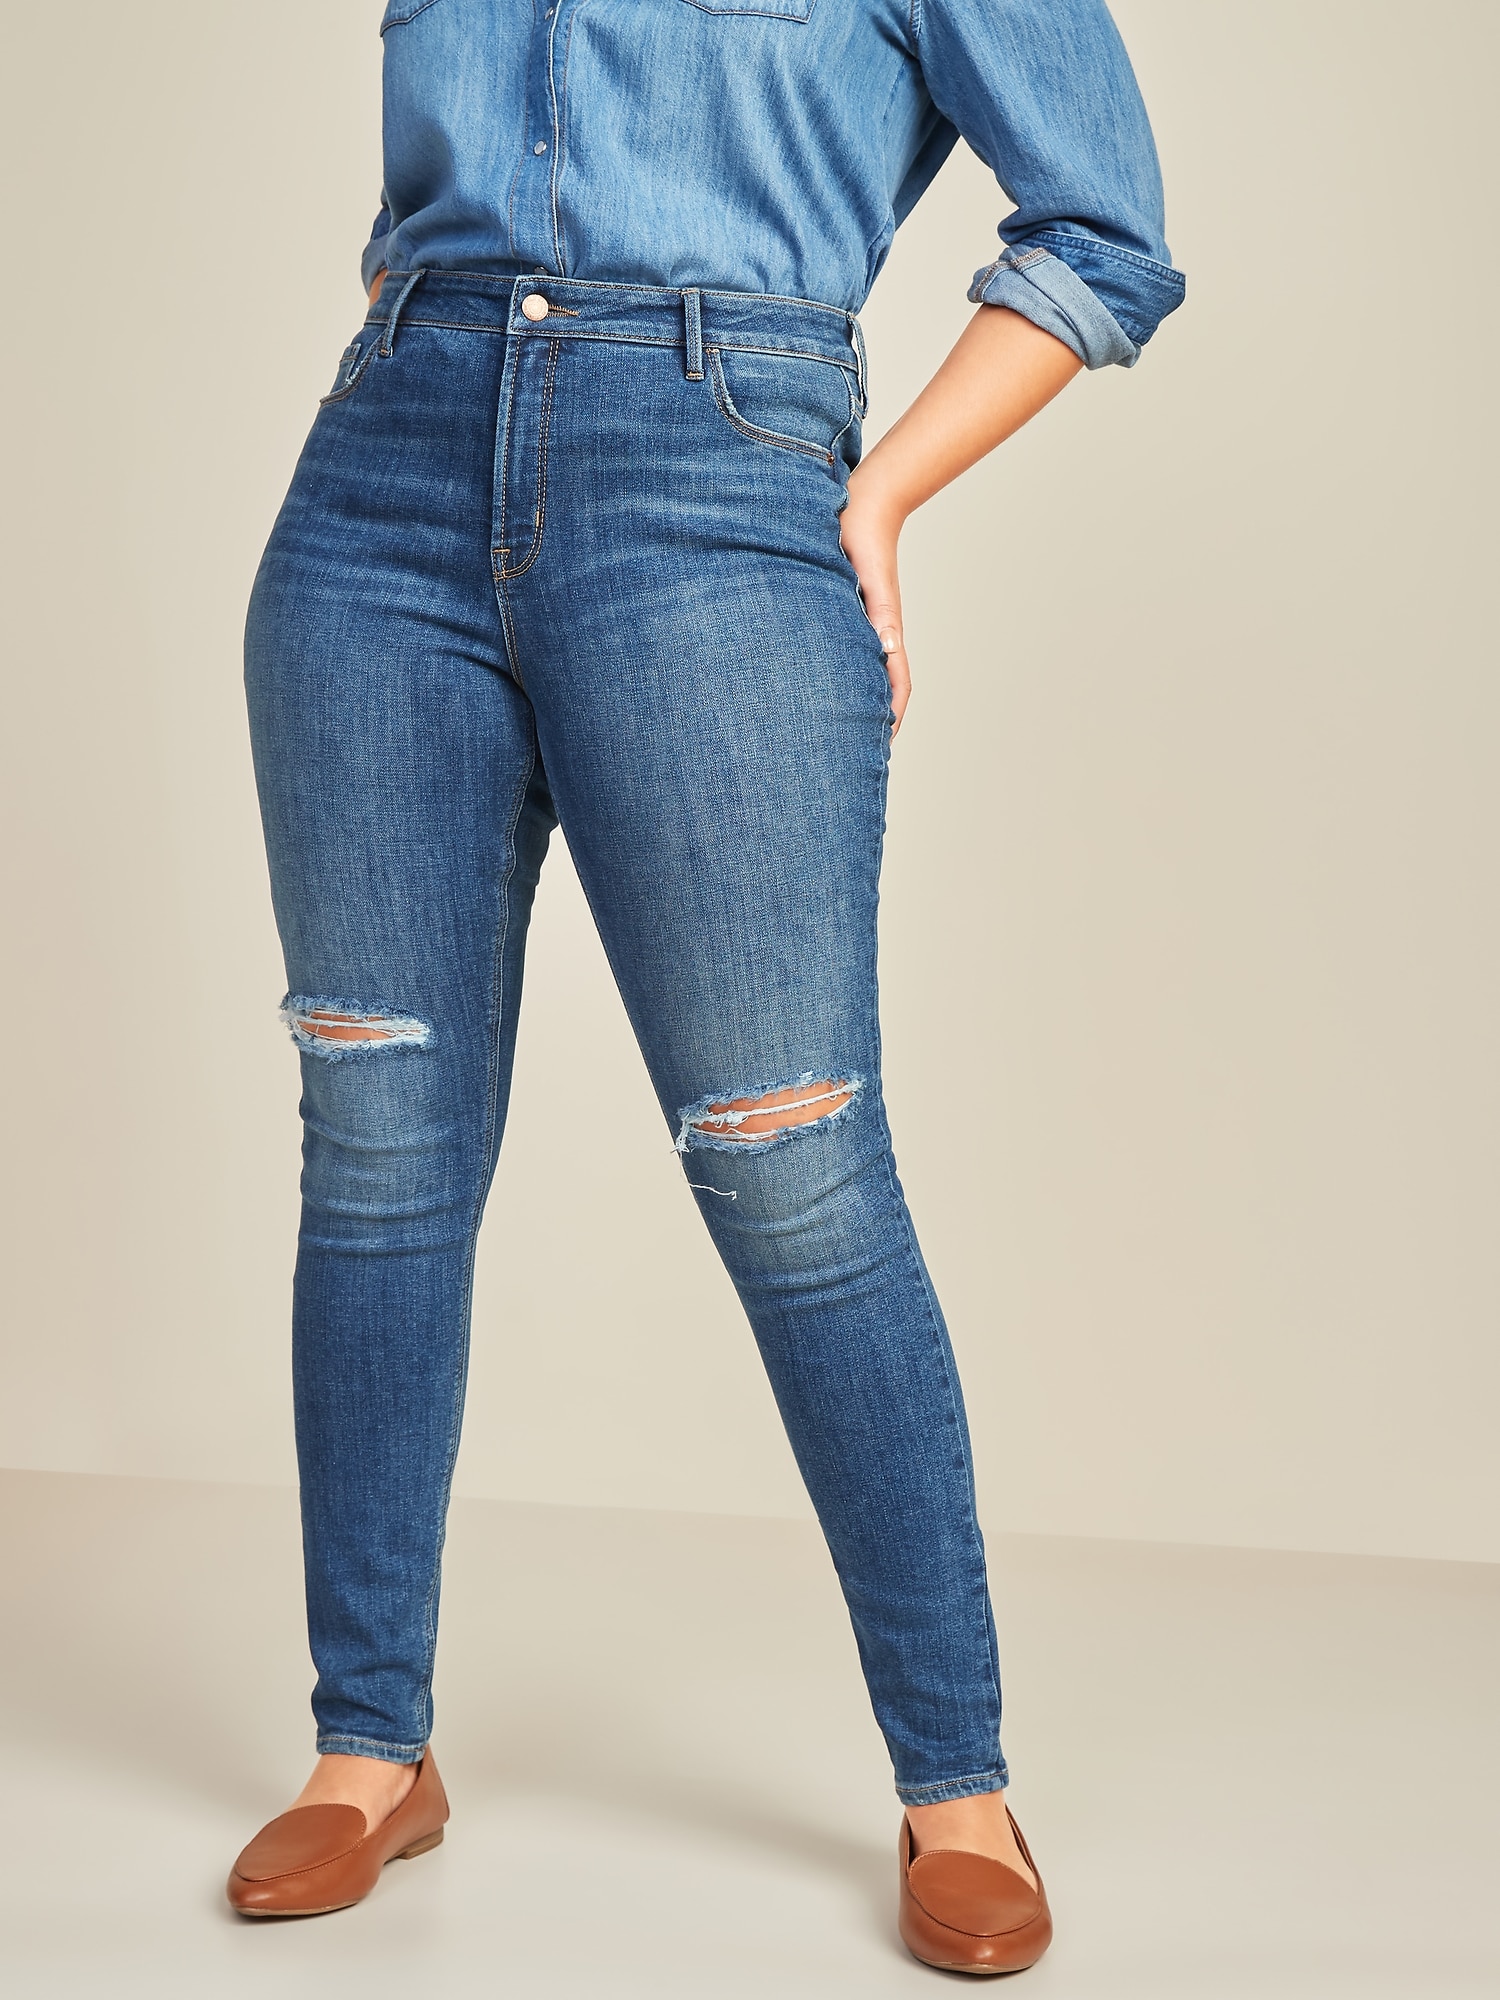 MERRYDAY Woman Denim Skinny Ultra Stretchy Tassel Ripped Jeans Pants